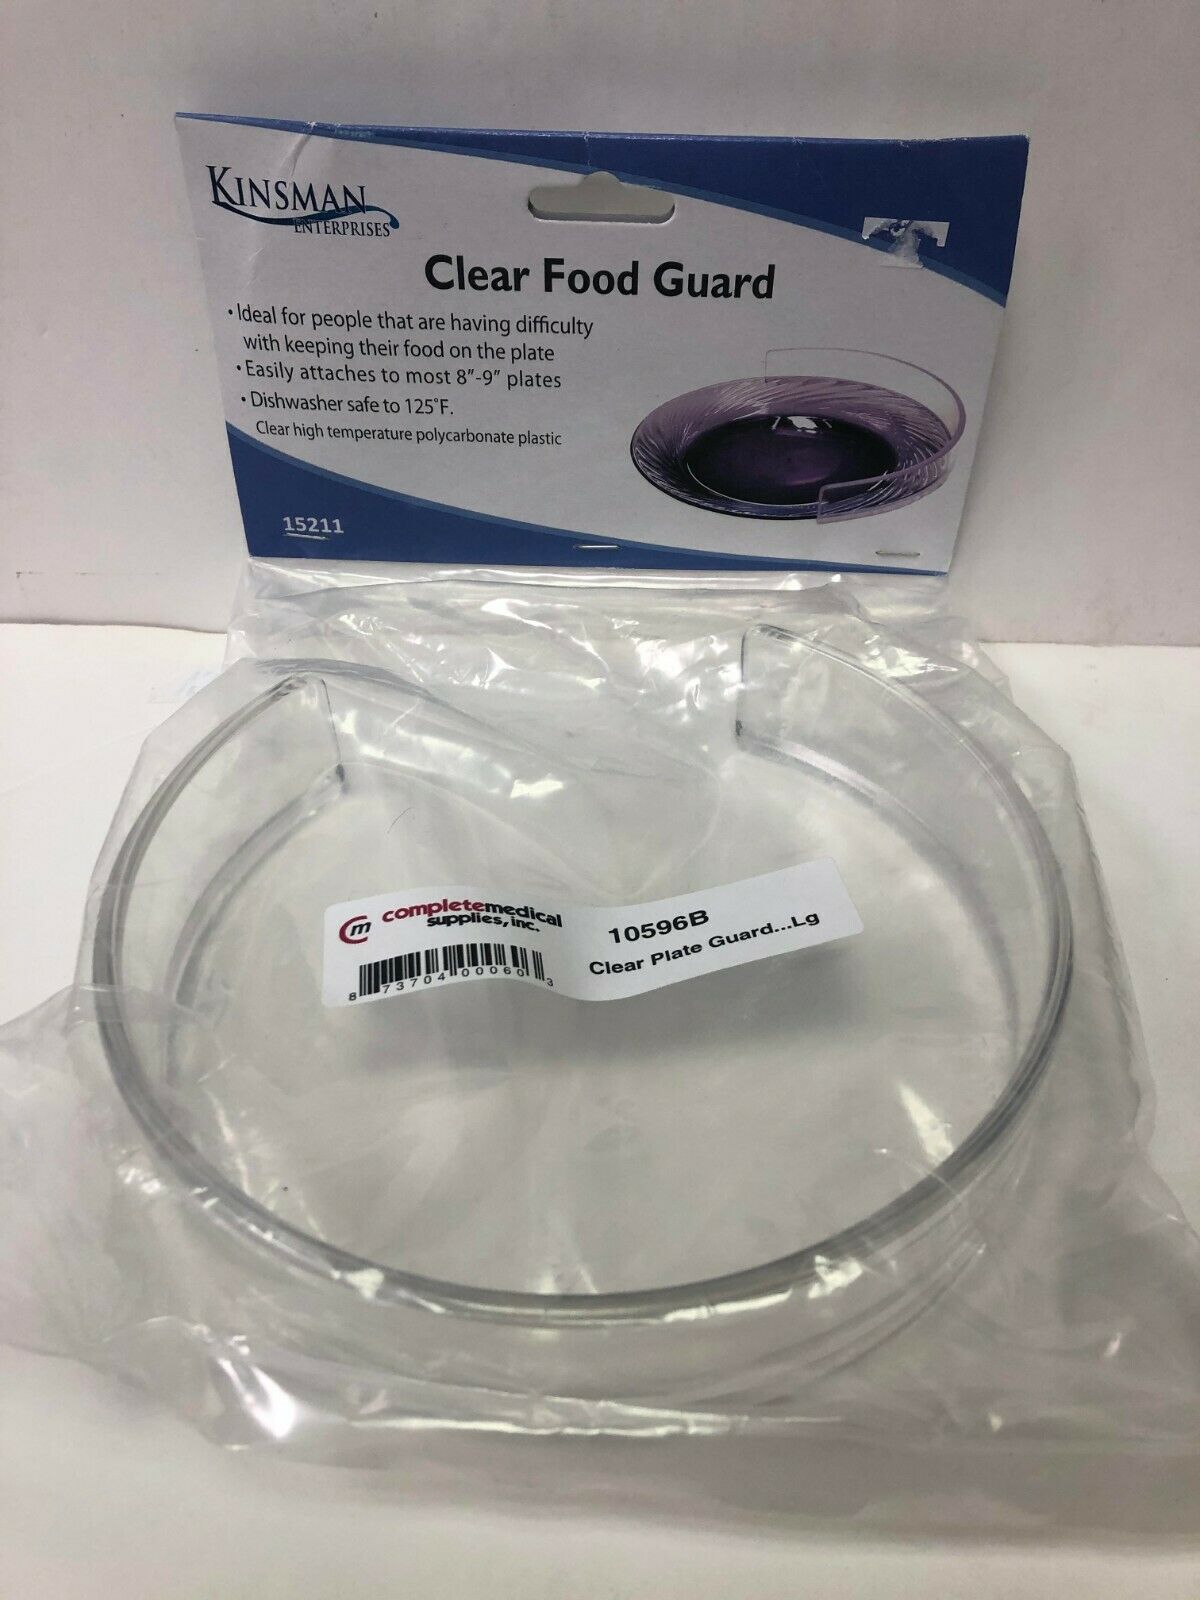 Kinsman Enterprises Clear Food Guard